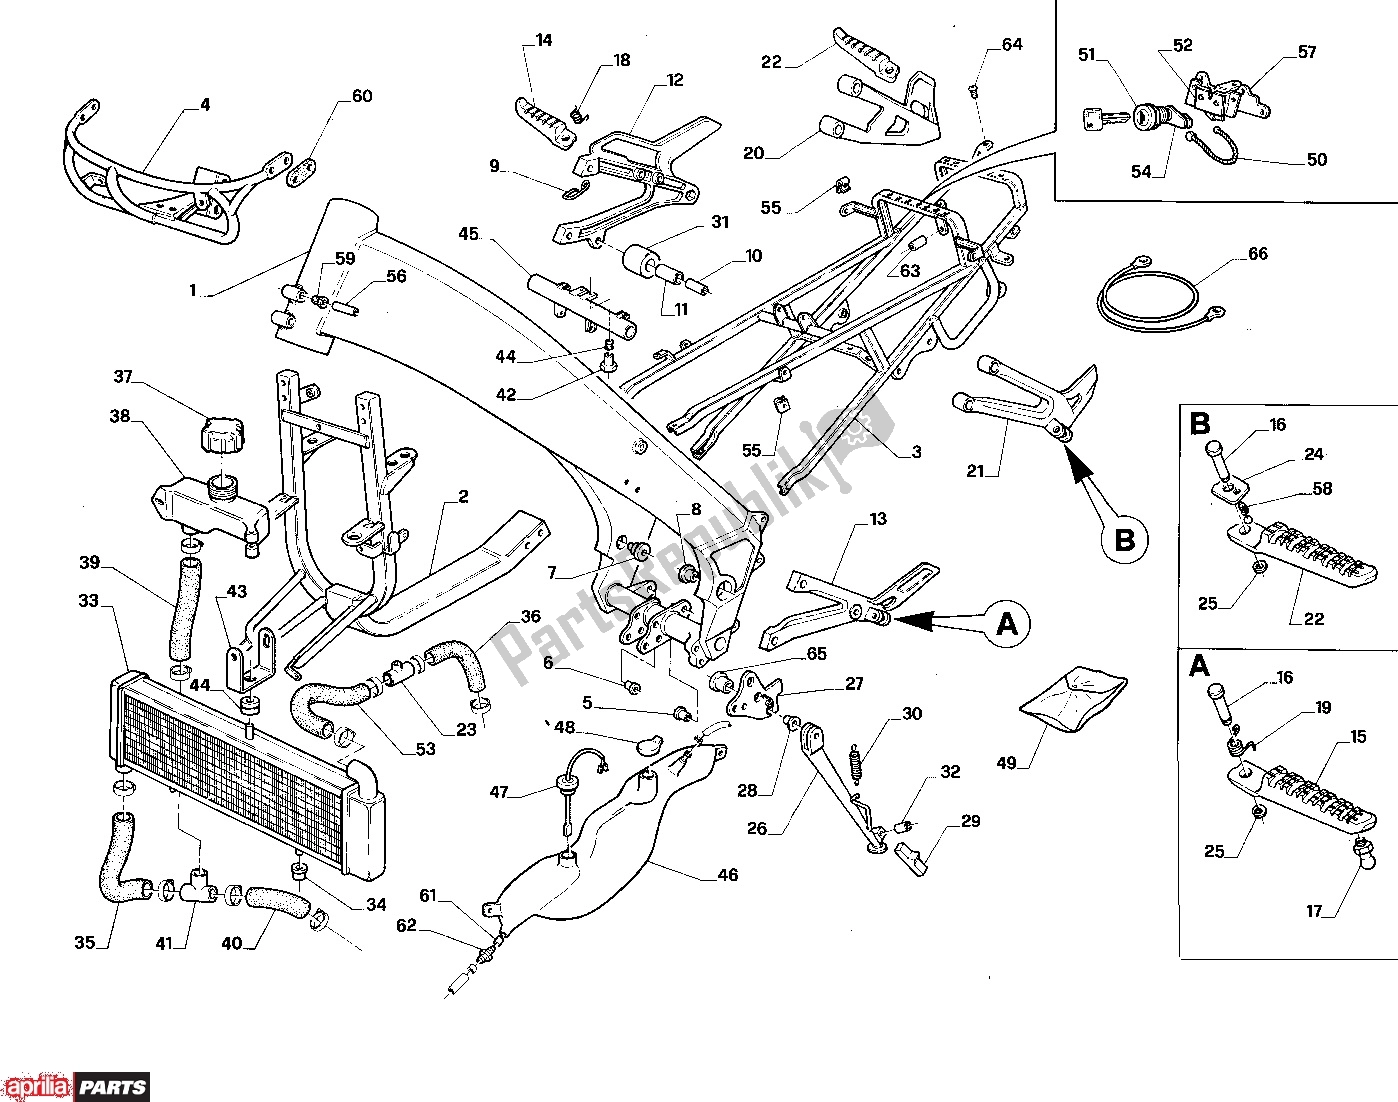 Alle Teile für das Frame des Aprilia AF1 312 125 1990 - 1995